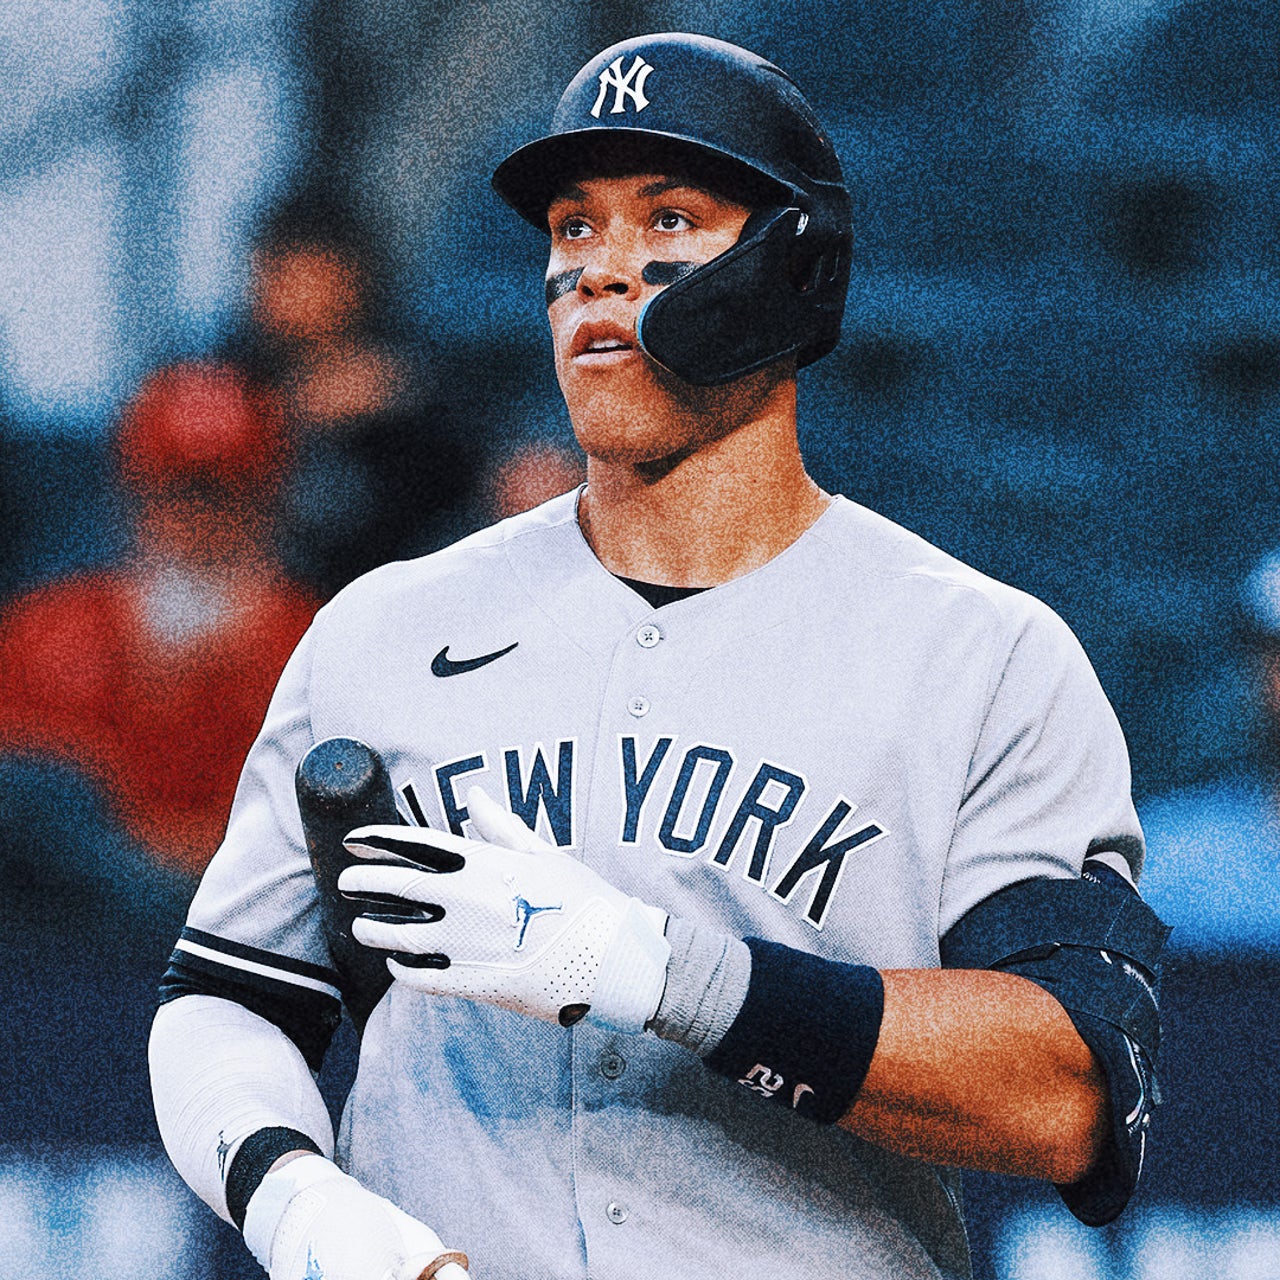 Aaron Judge 'equipped' for pressures of Yankees' wild season